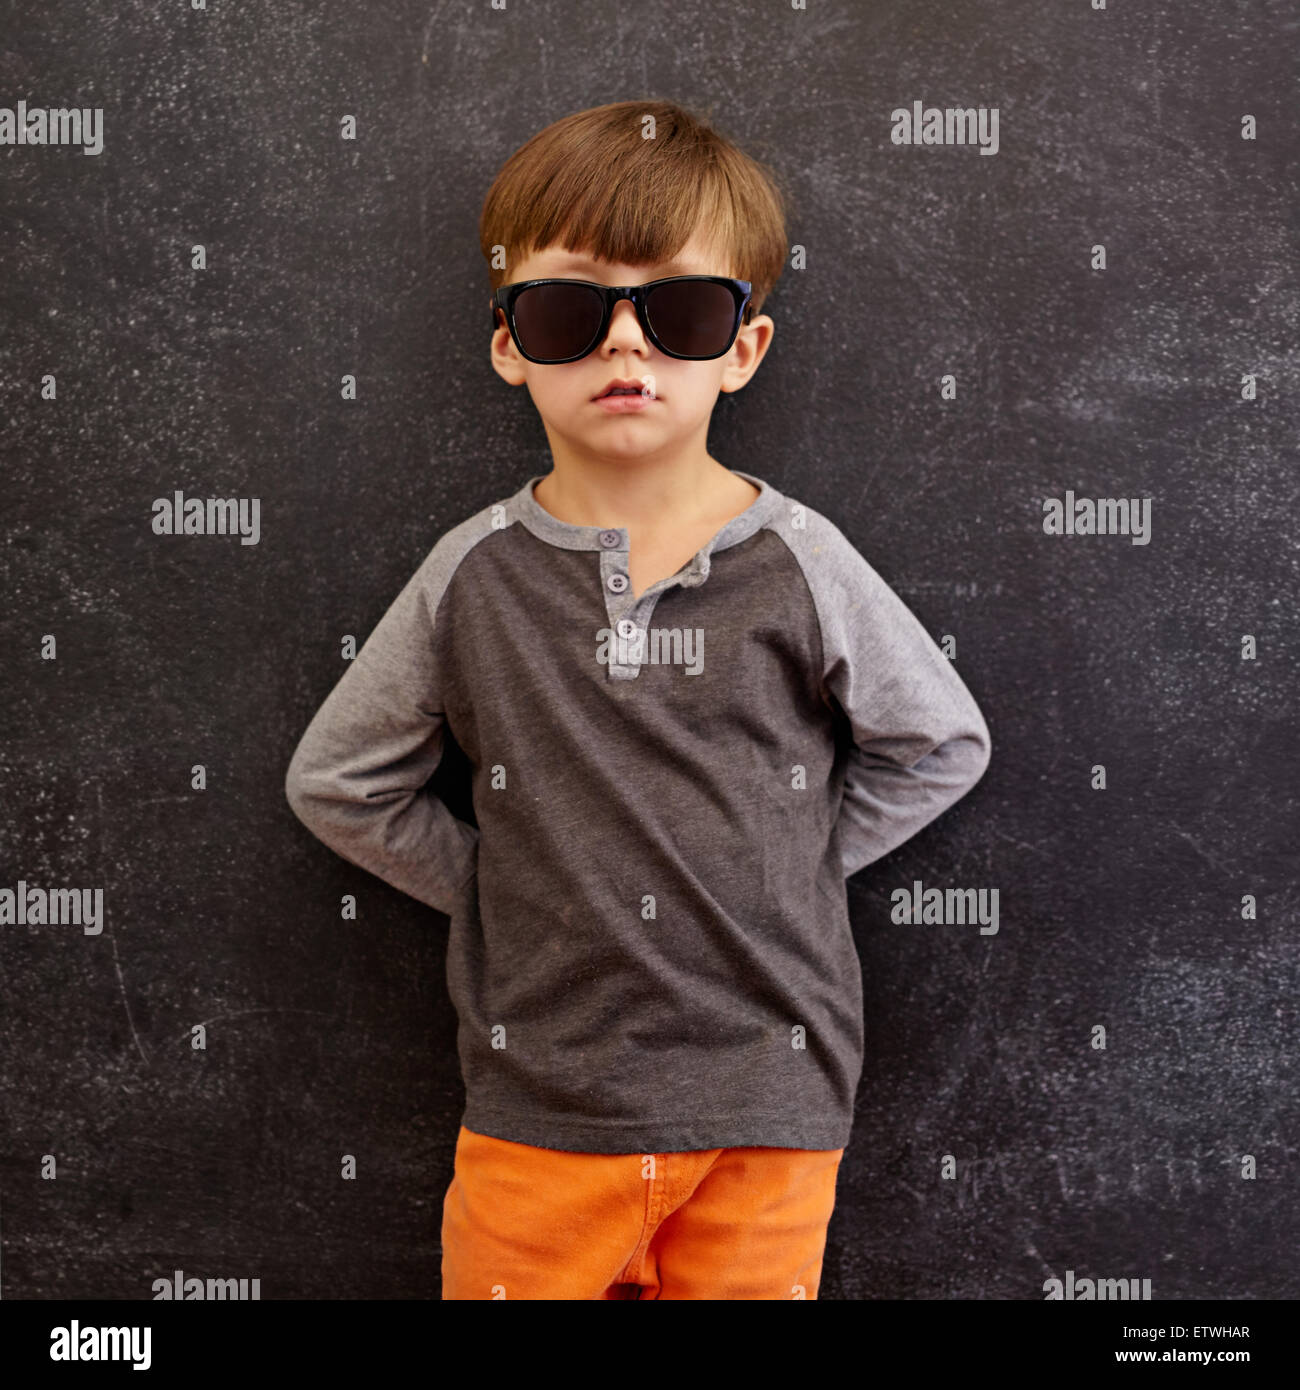 Portrait of innocent little kid wearing sunglasses. Little boy leaning on a blackboard. Square composition. Stock Photo